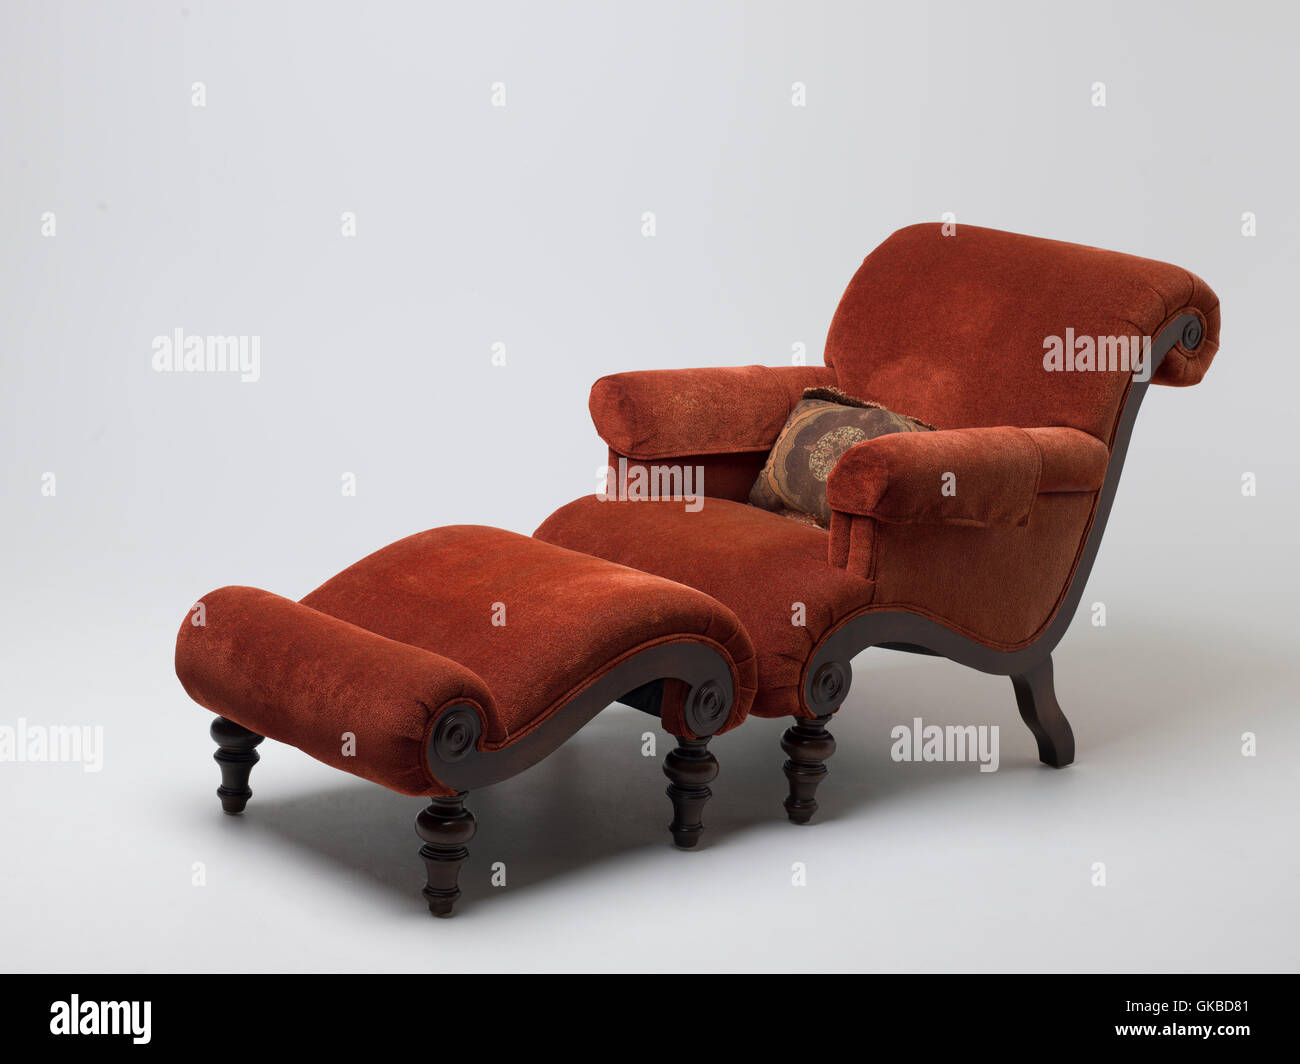 Burnt sienna chair and ottoman set Stock Photo